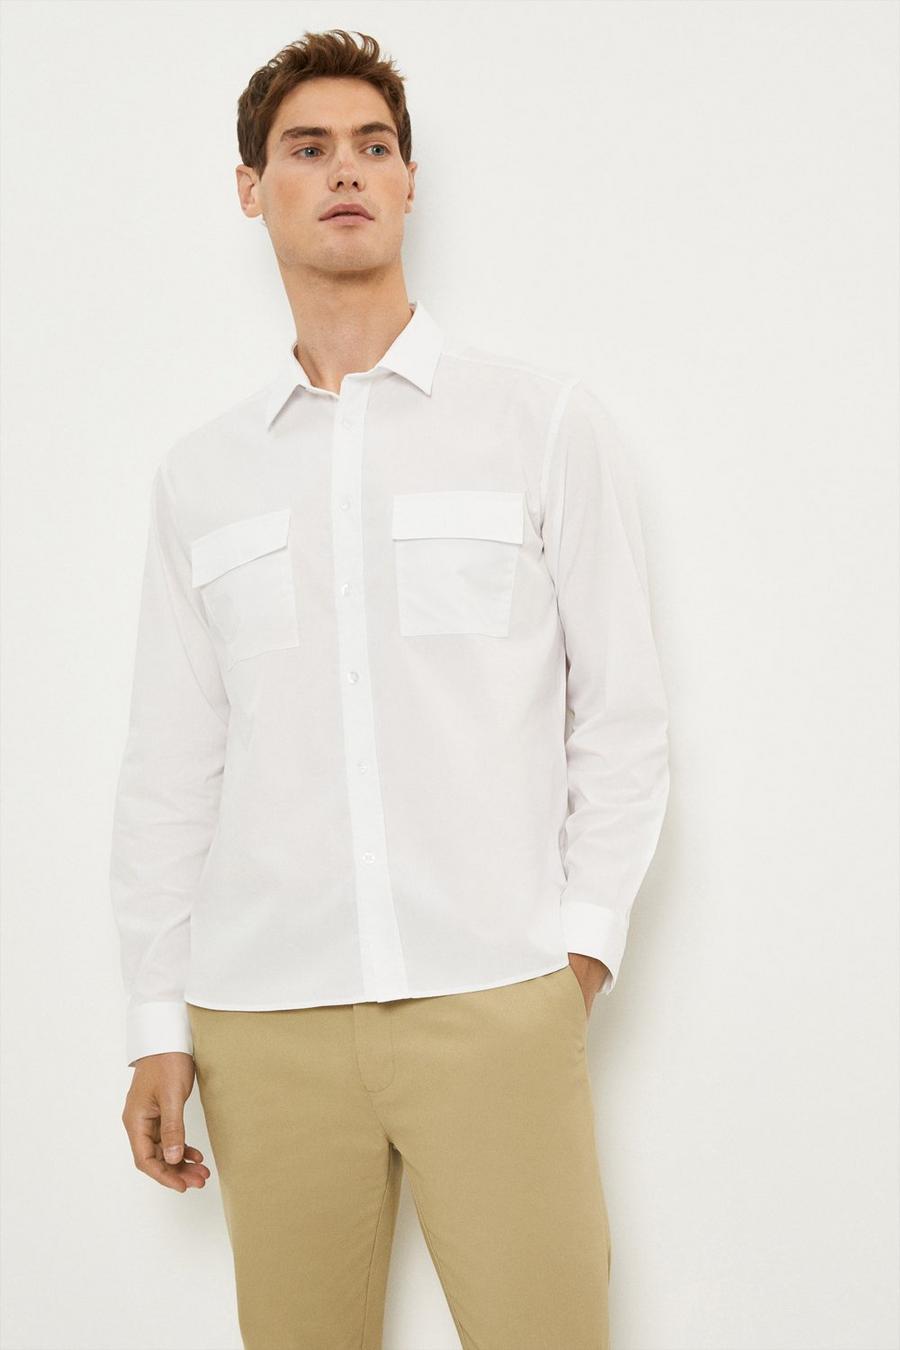 Men's Shirts | Casual, Formal & Flannel Shirts | Burton UK